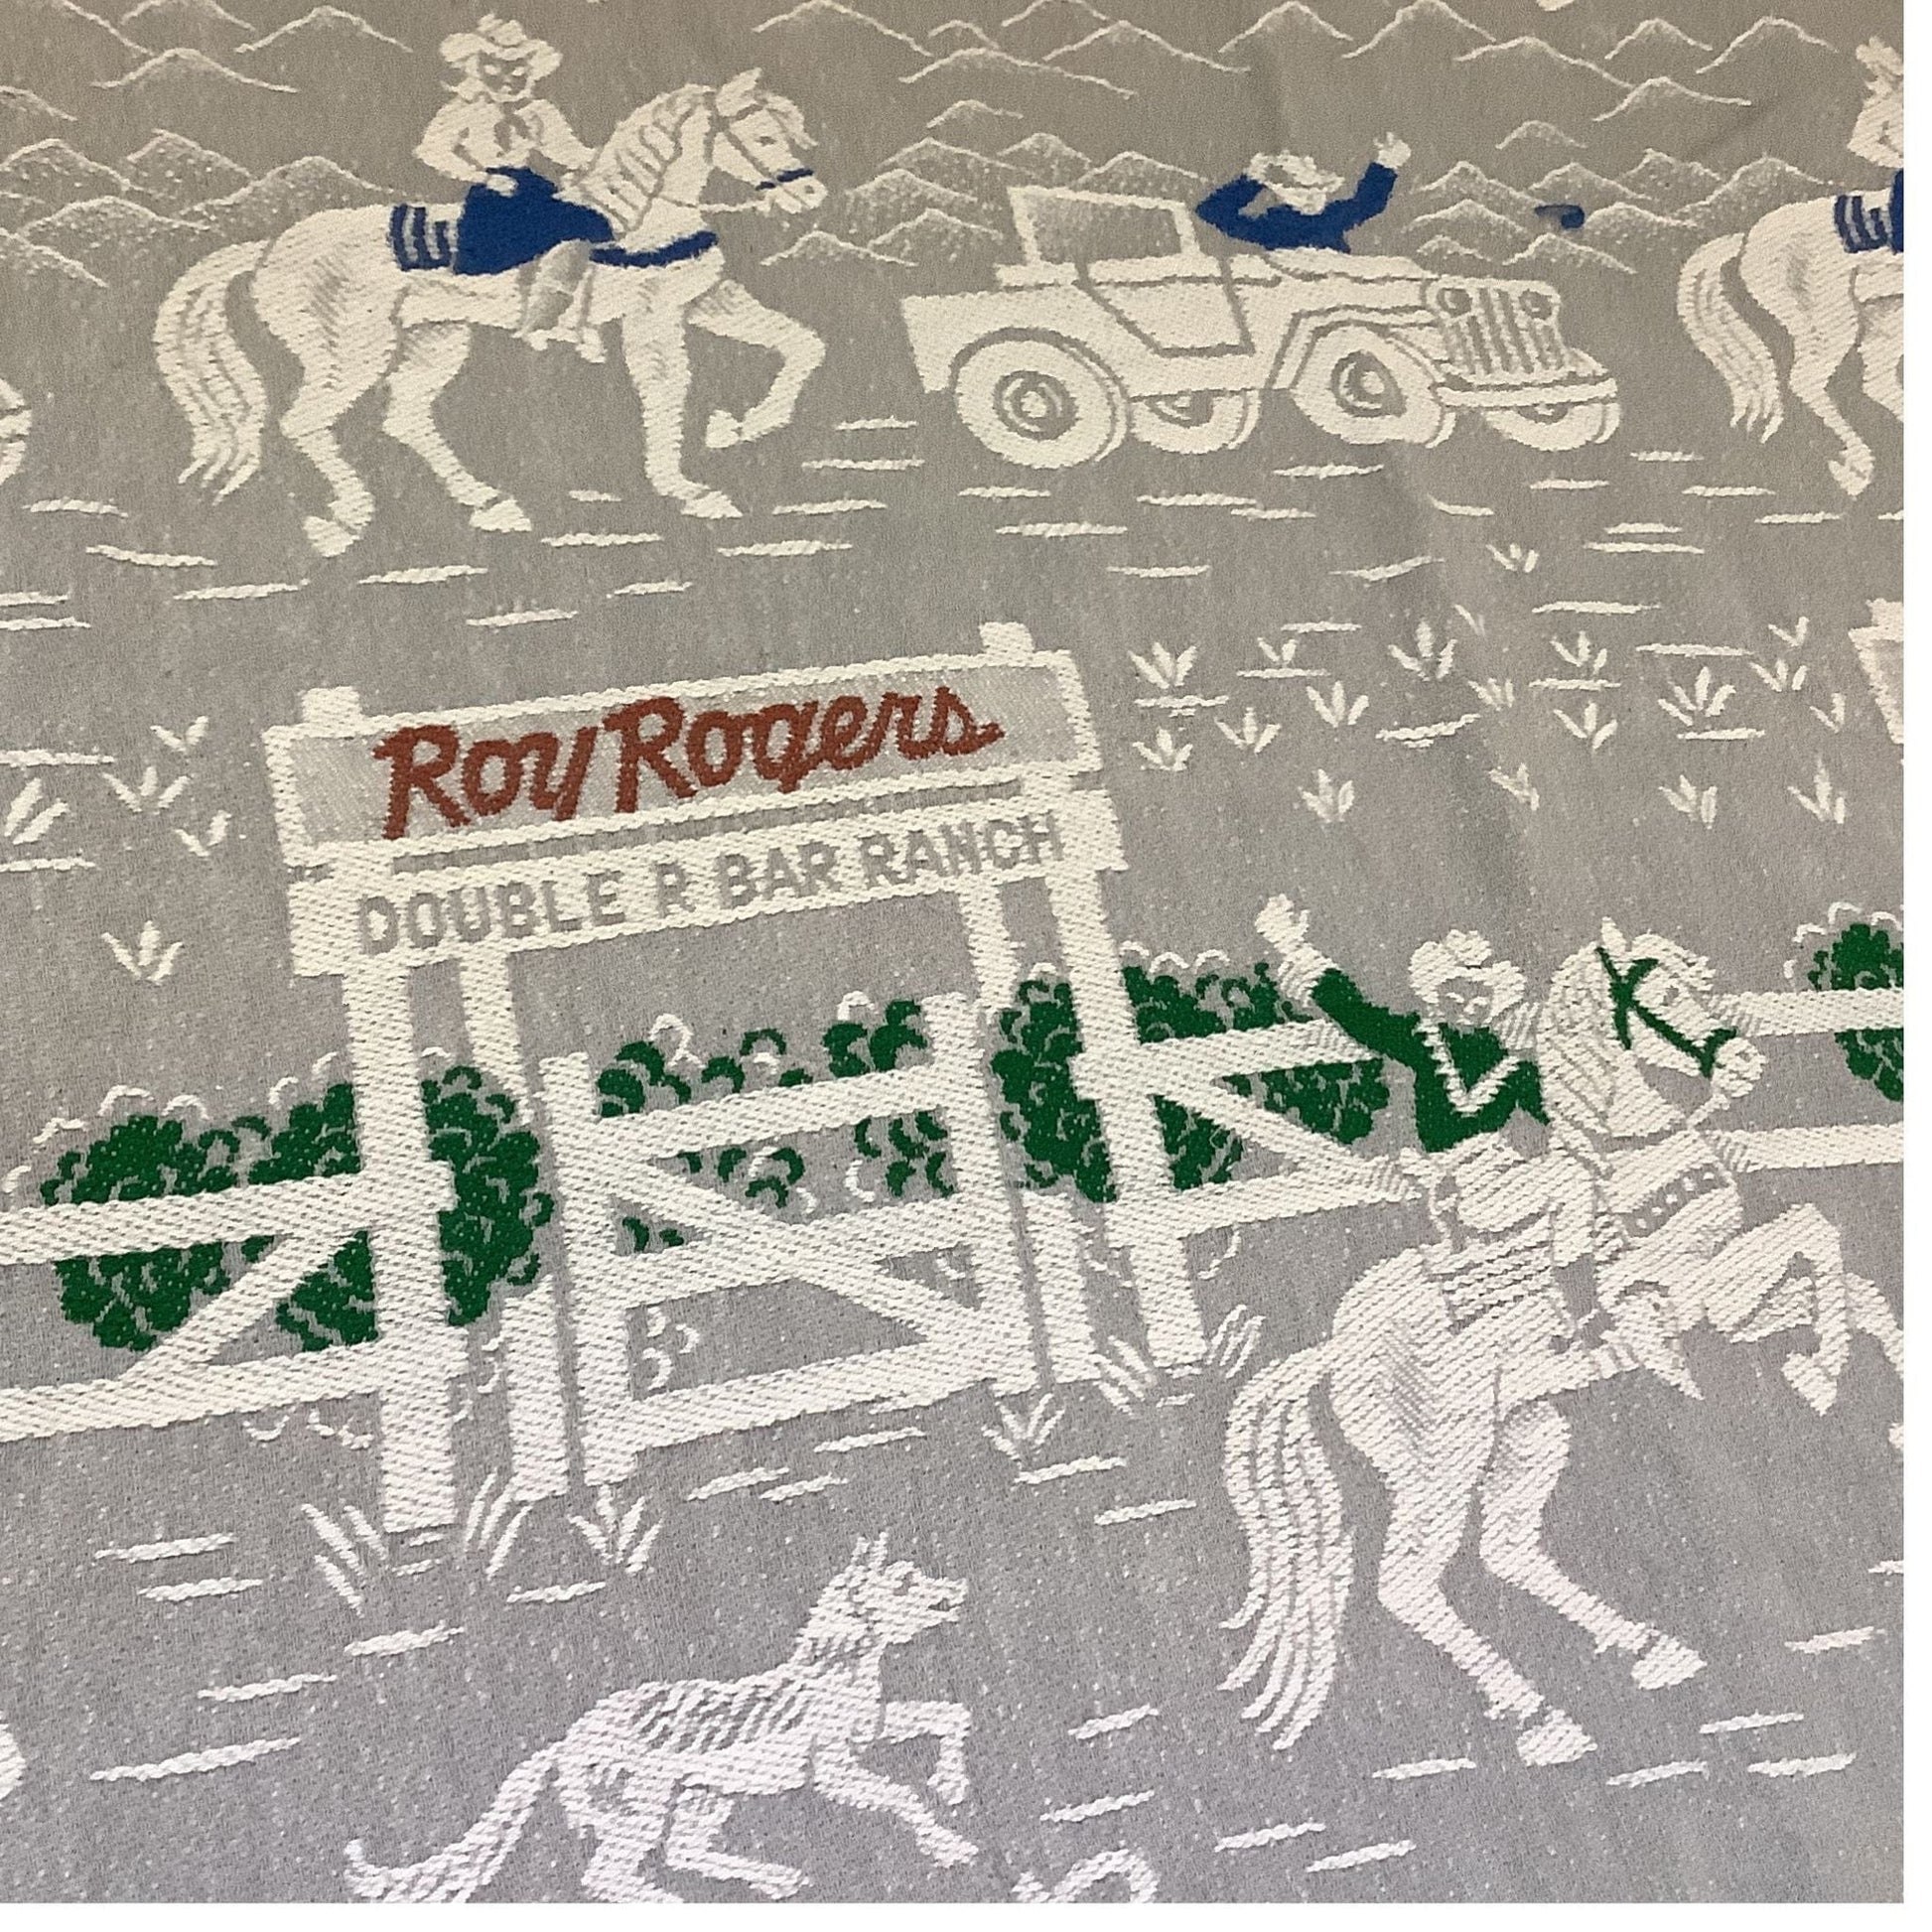 Roy Rogers Vintage Bedspread Multi / Cotton / Vintage 1950s